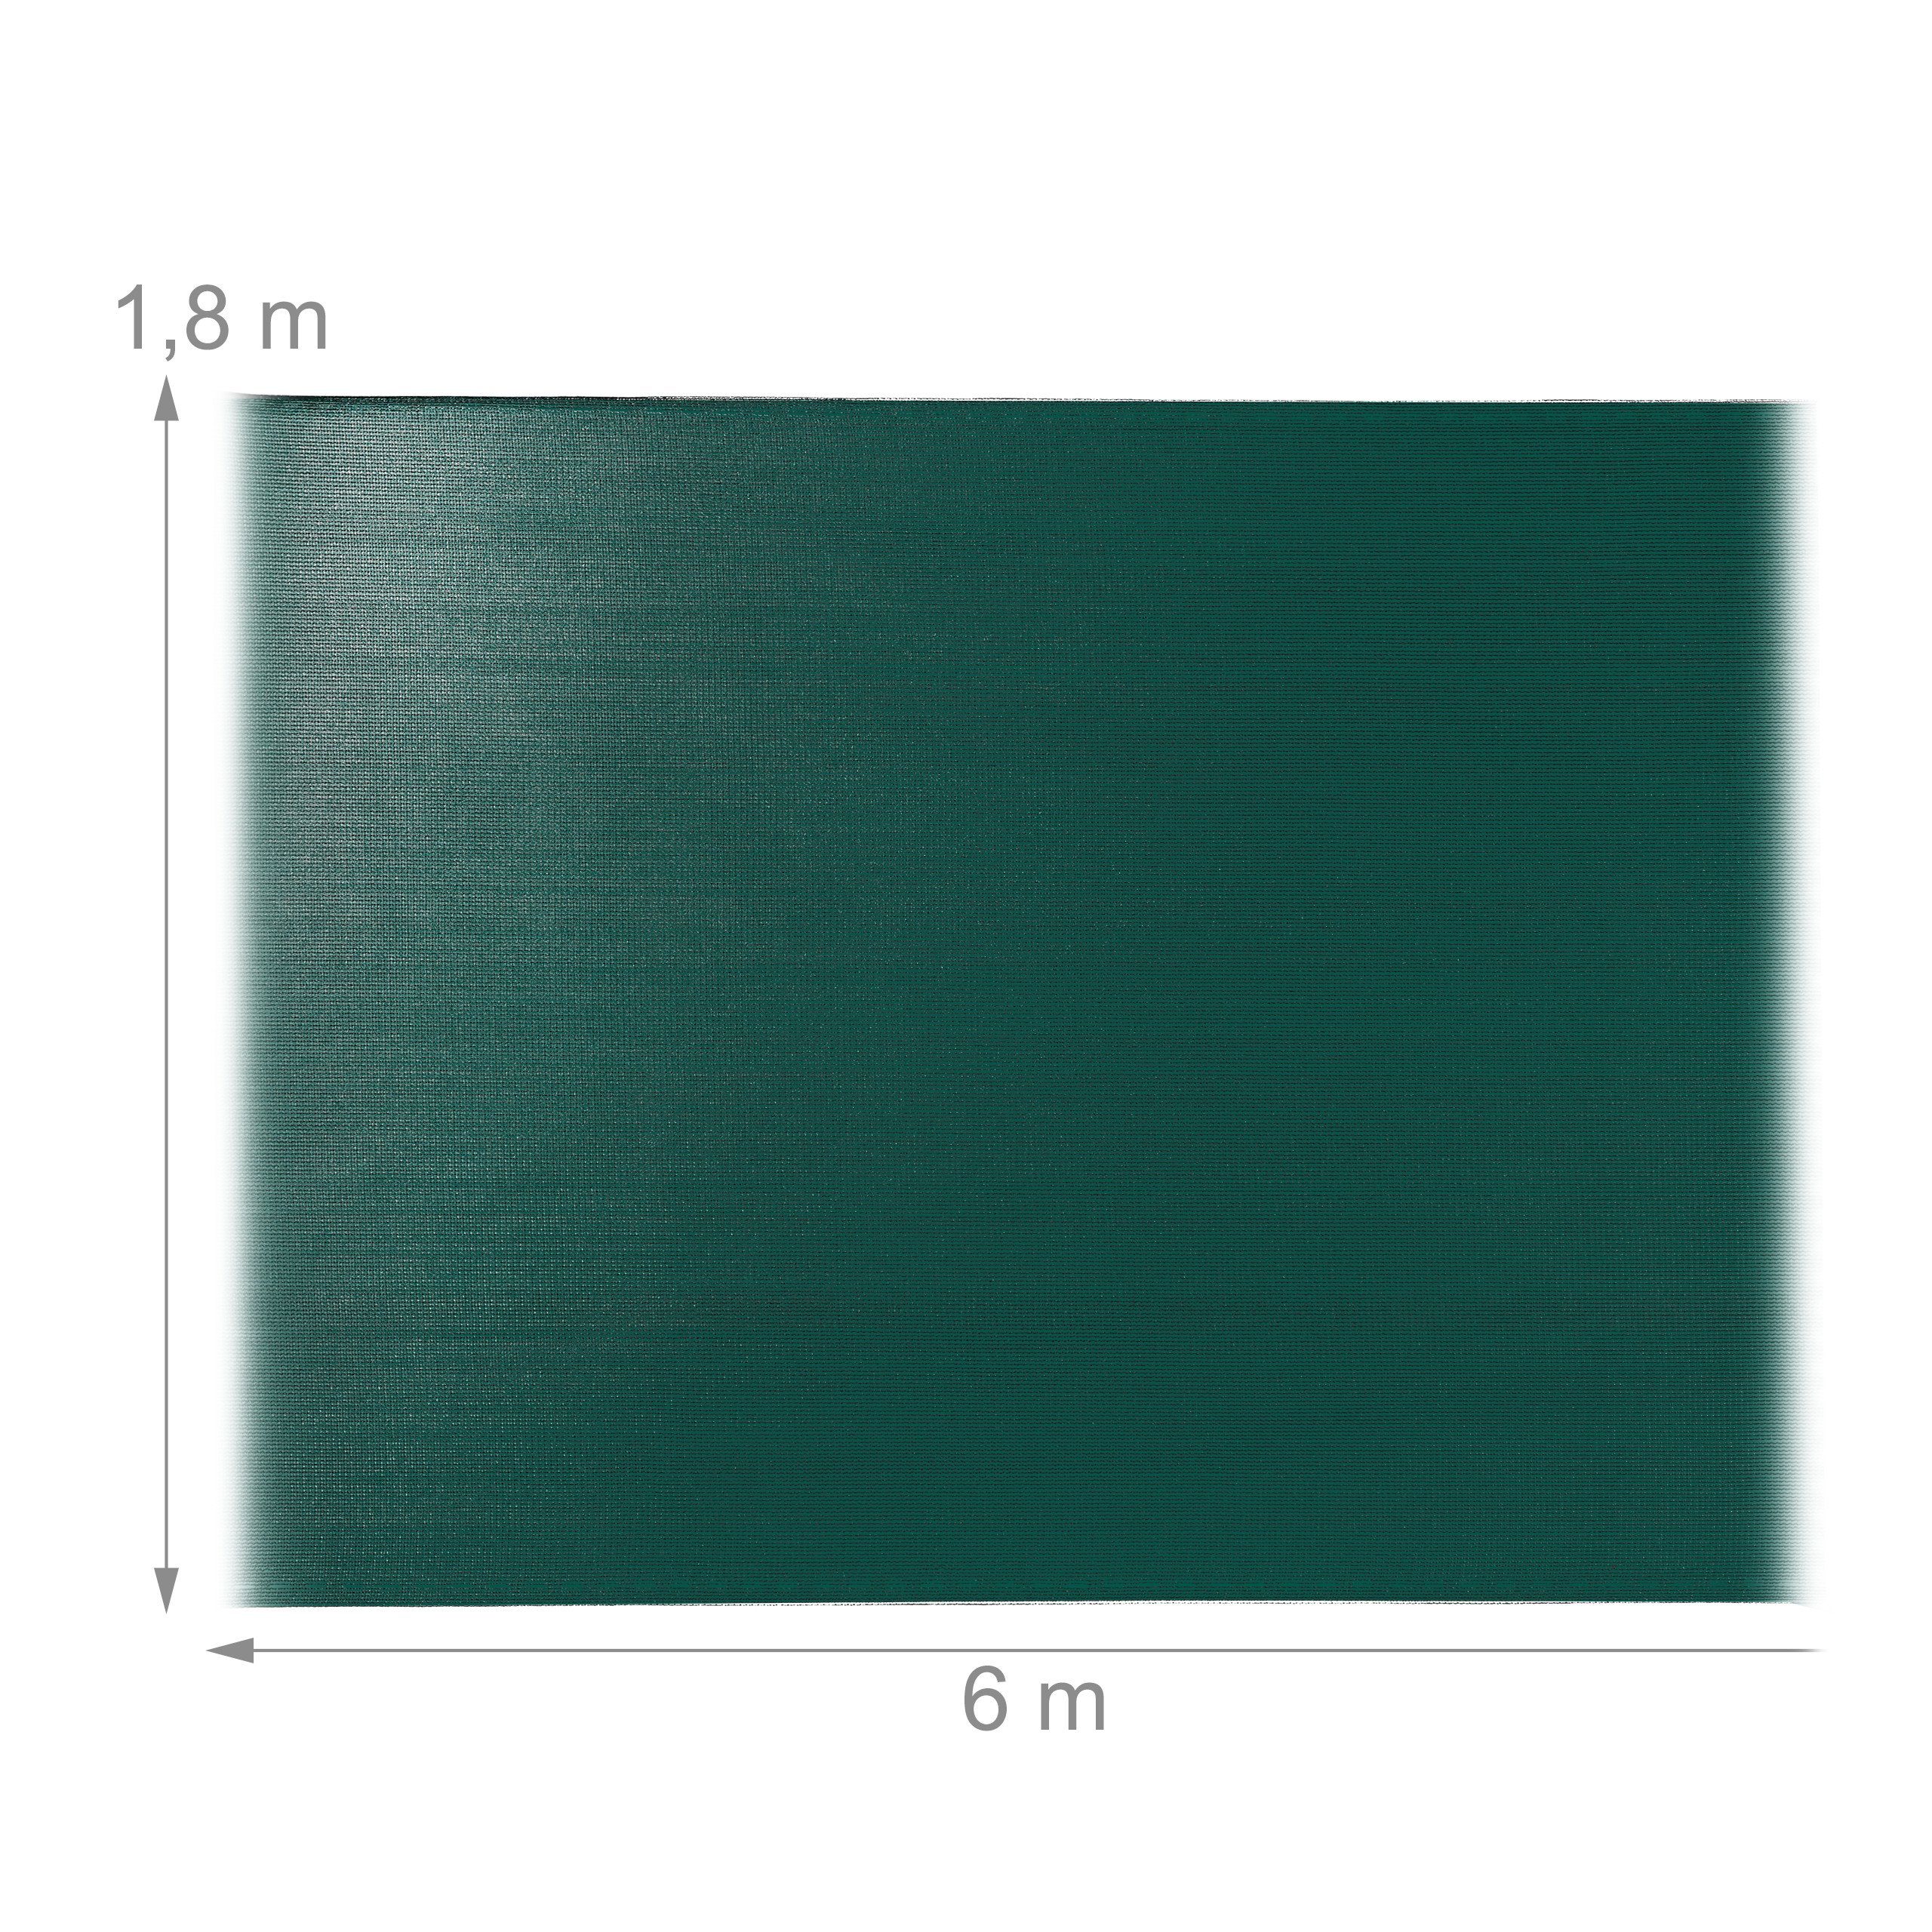 6 1,80m, x relaxdays Blende 1,8 Meter Zaunblende grün